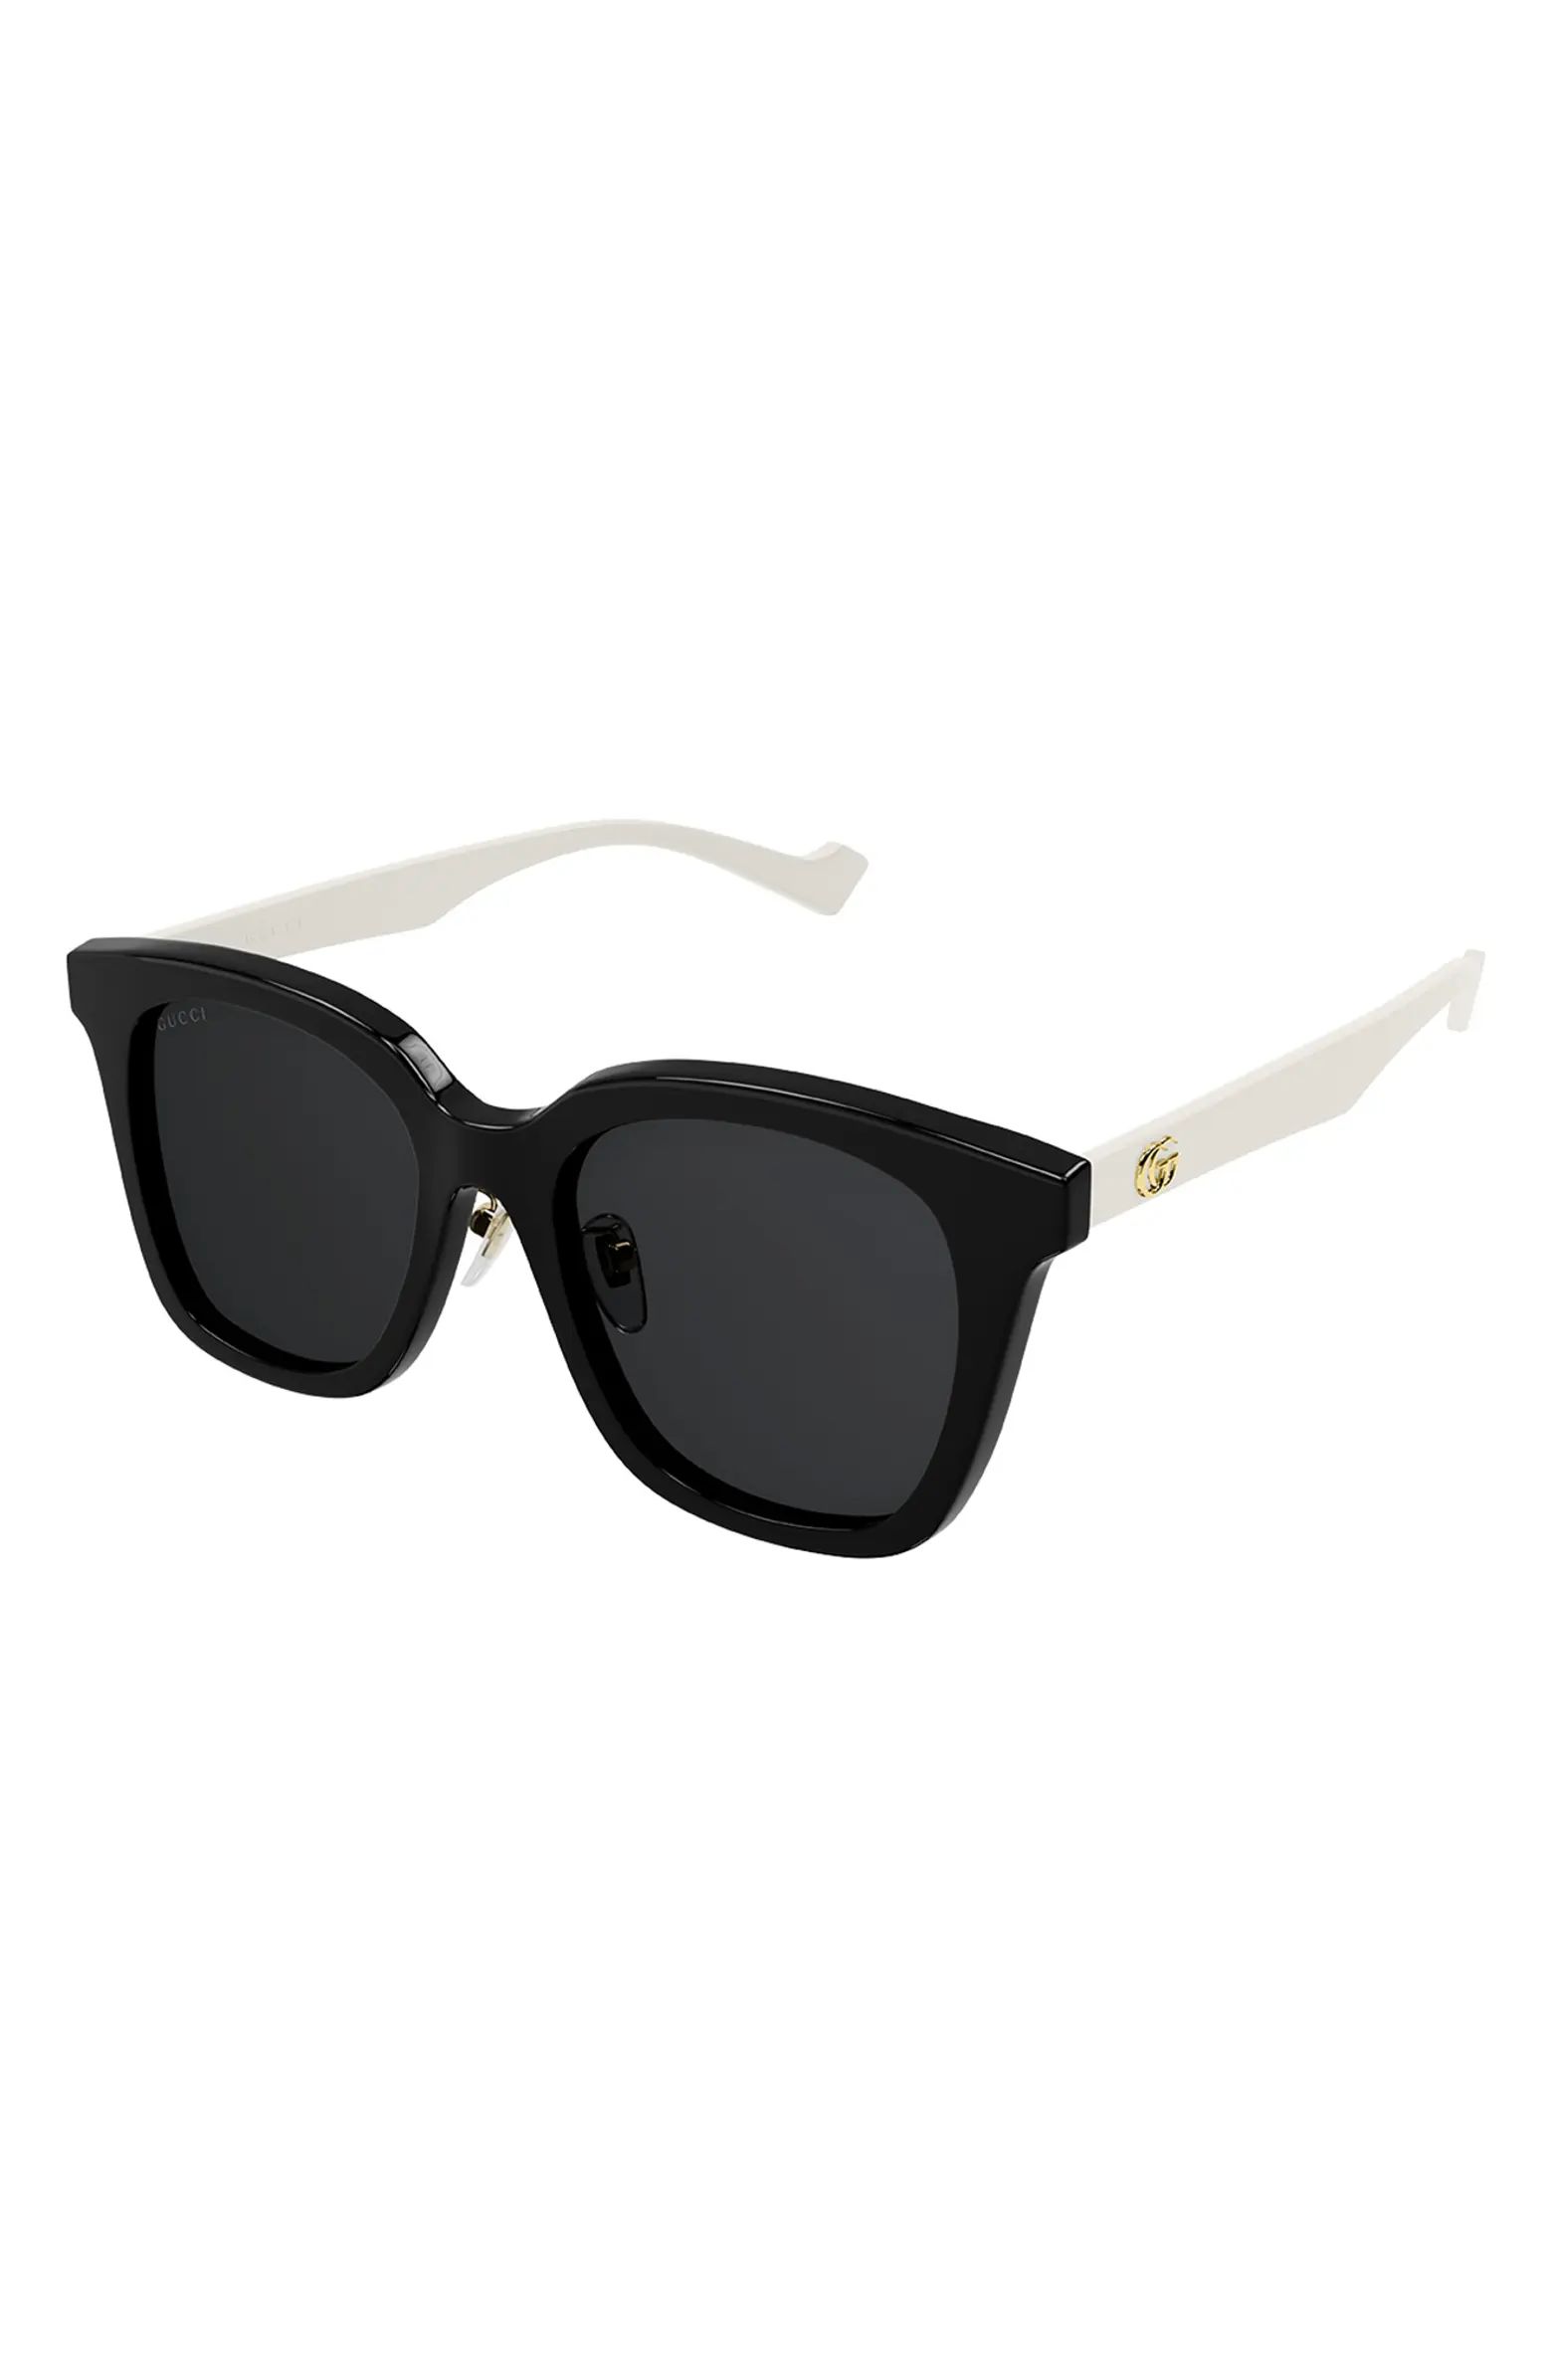 Gucci 55mm Square Sunglasses | Nordstrom | Nordstrom